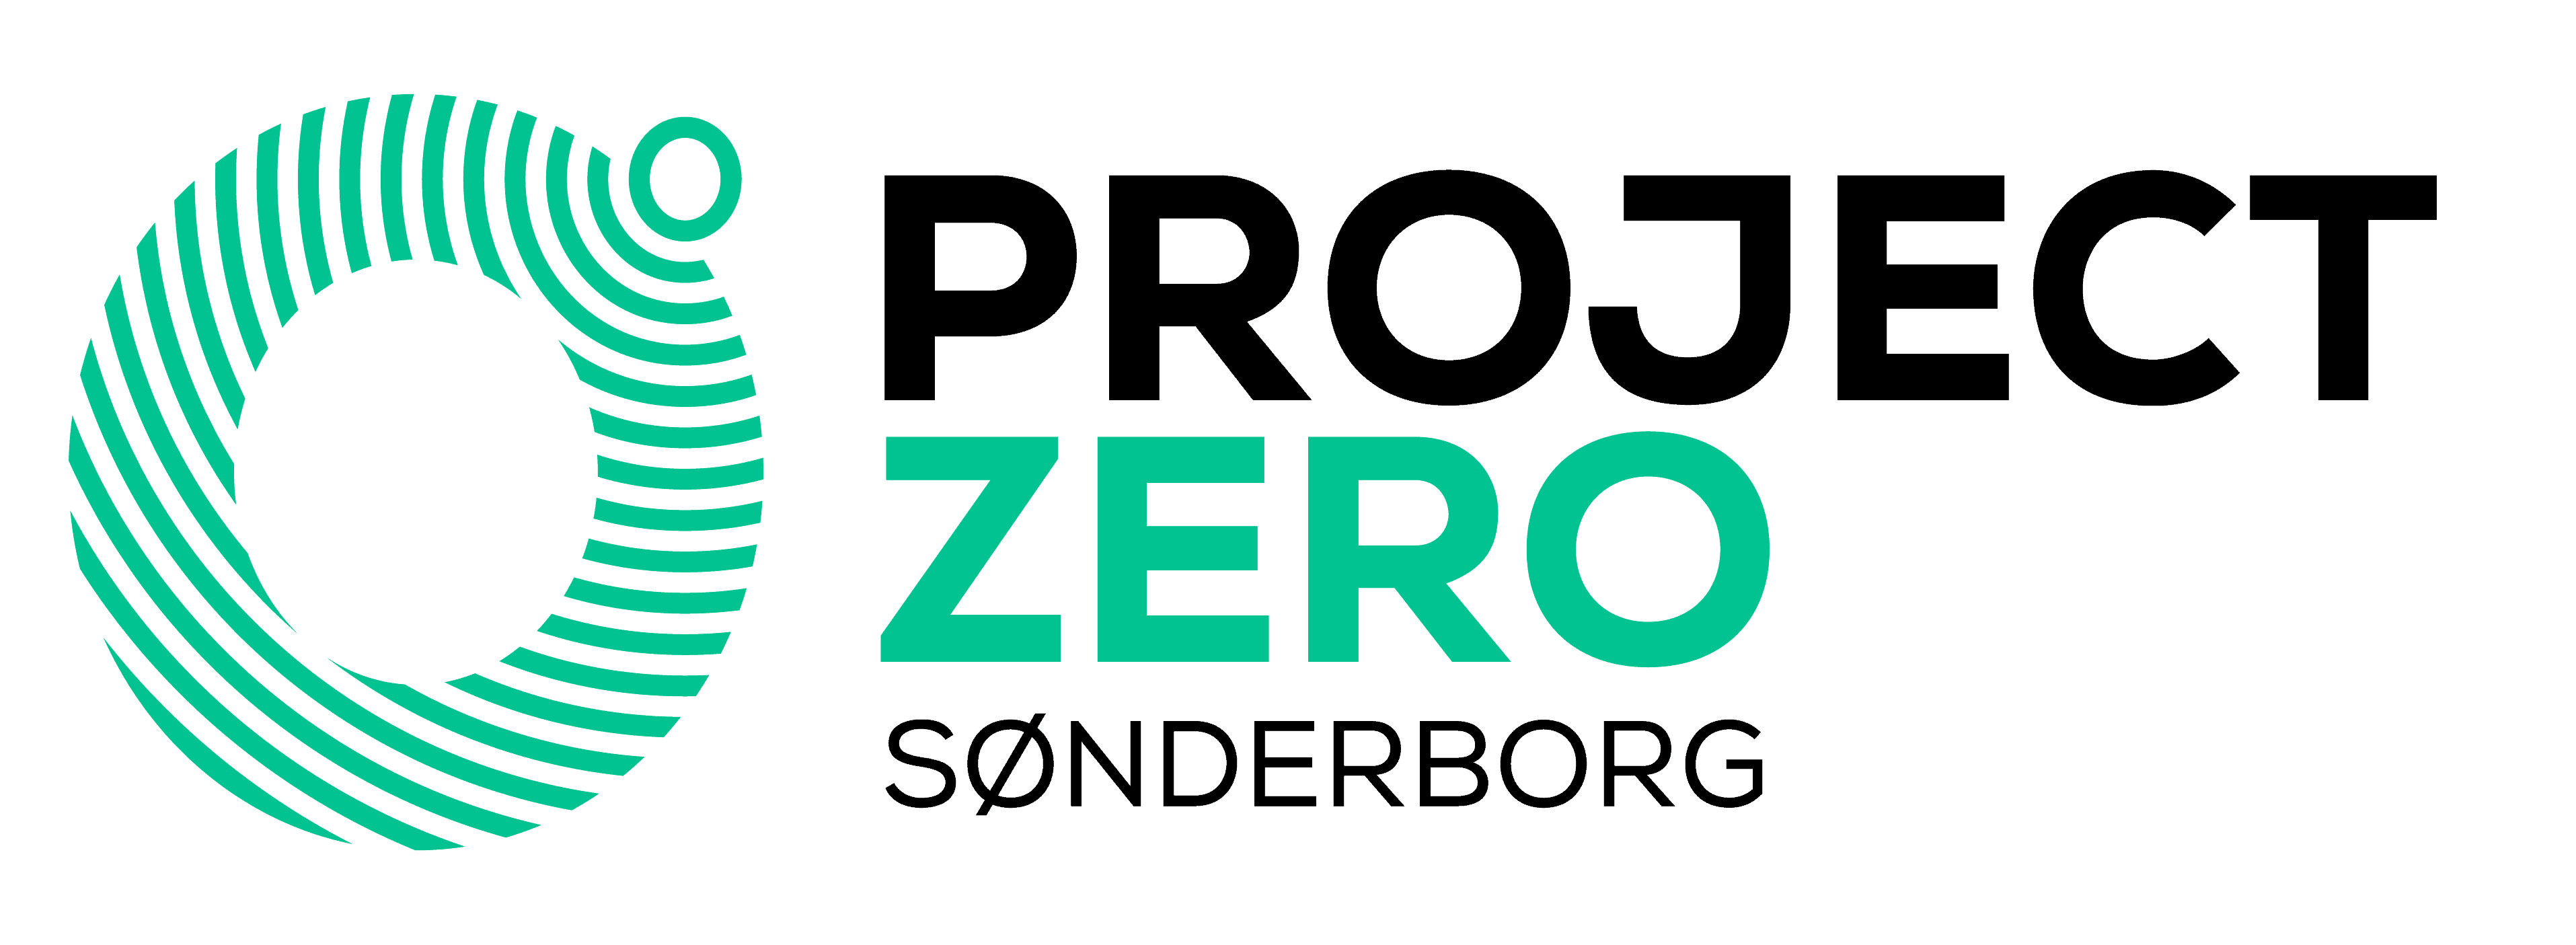 Project Zero Sønderborg logo